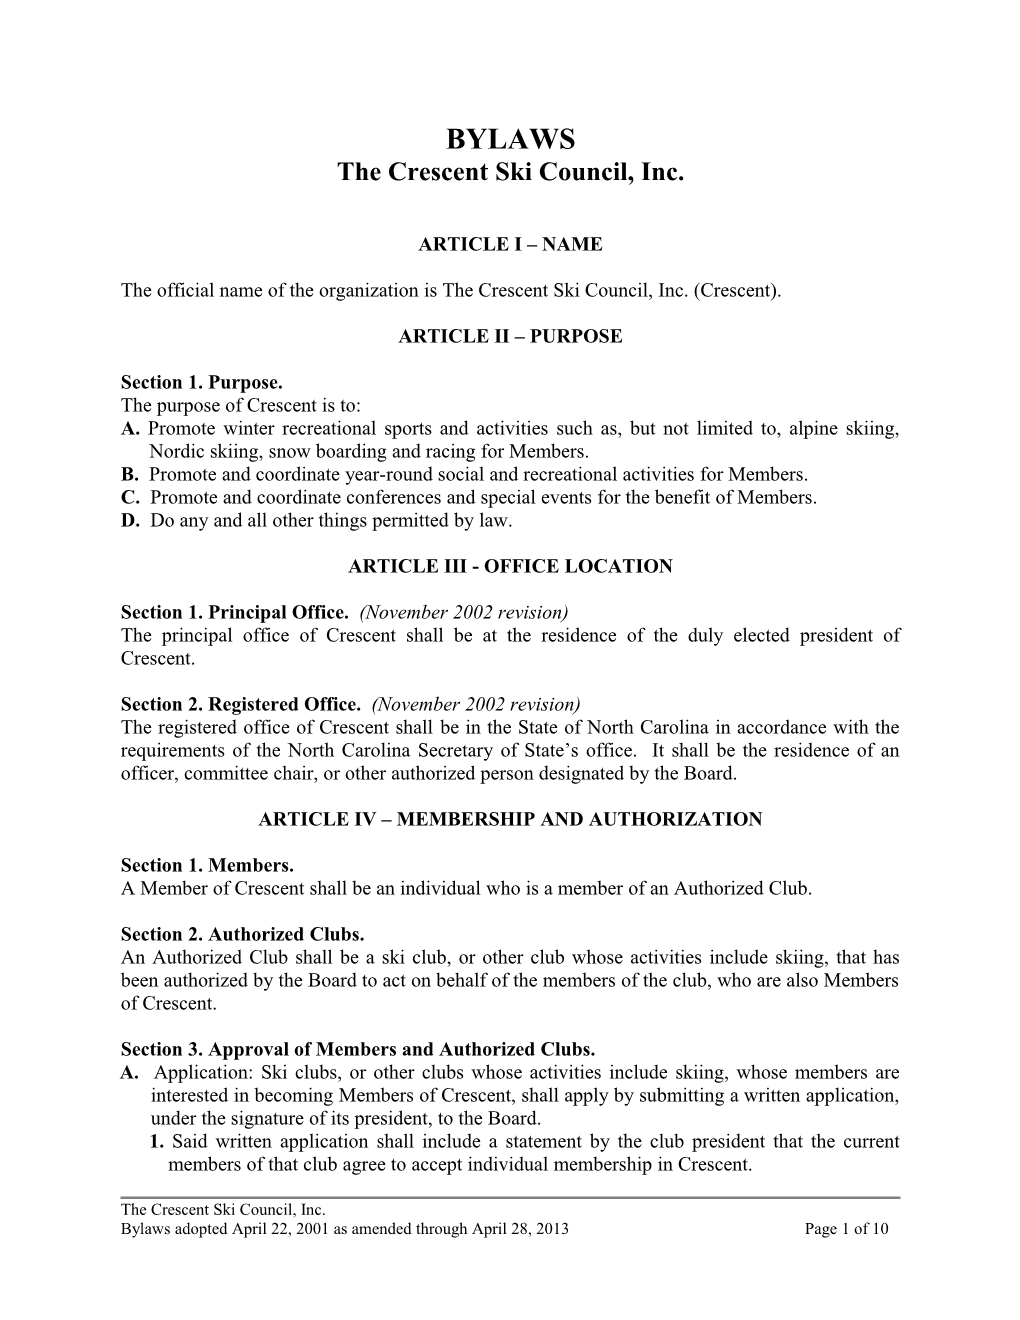 The Crescent Ski Council, Inc